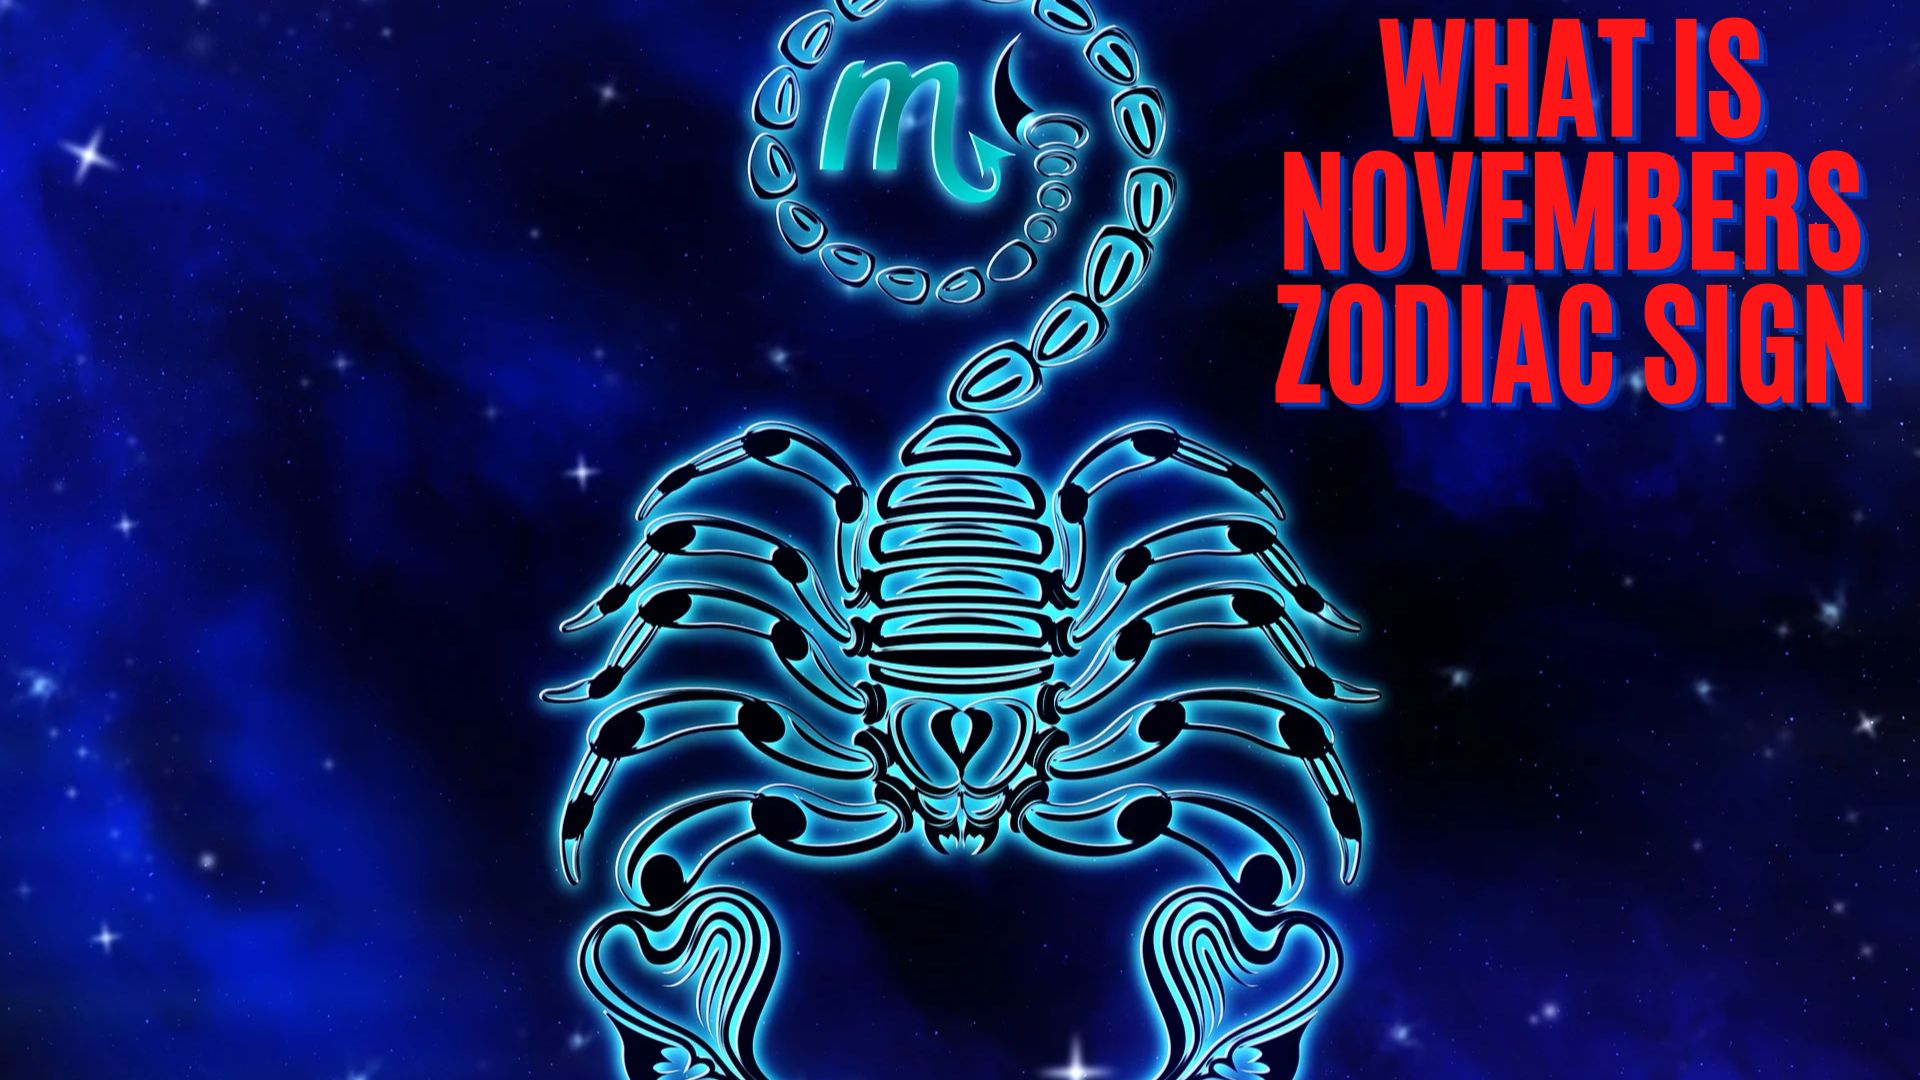 What Is Novembers Zodiac Sign? Scorpio Or Sagittarius